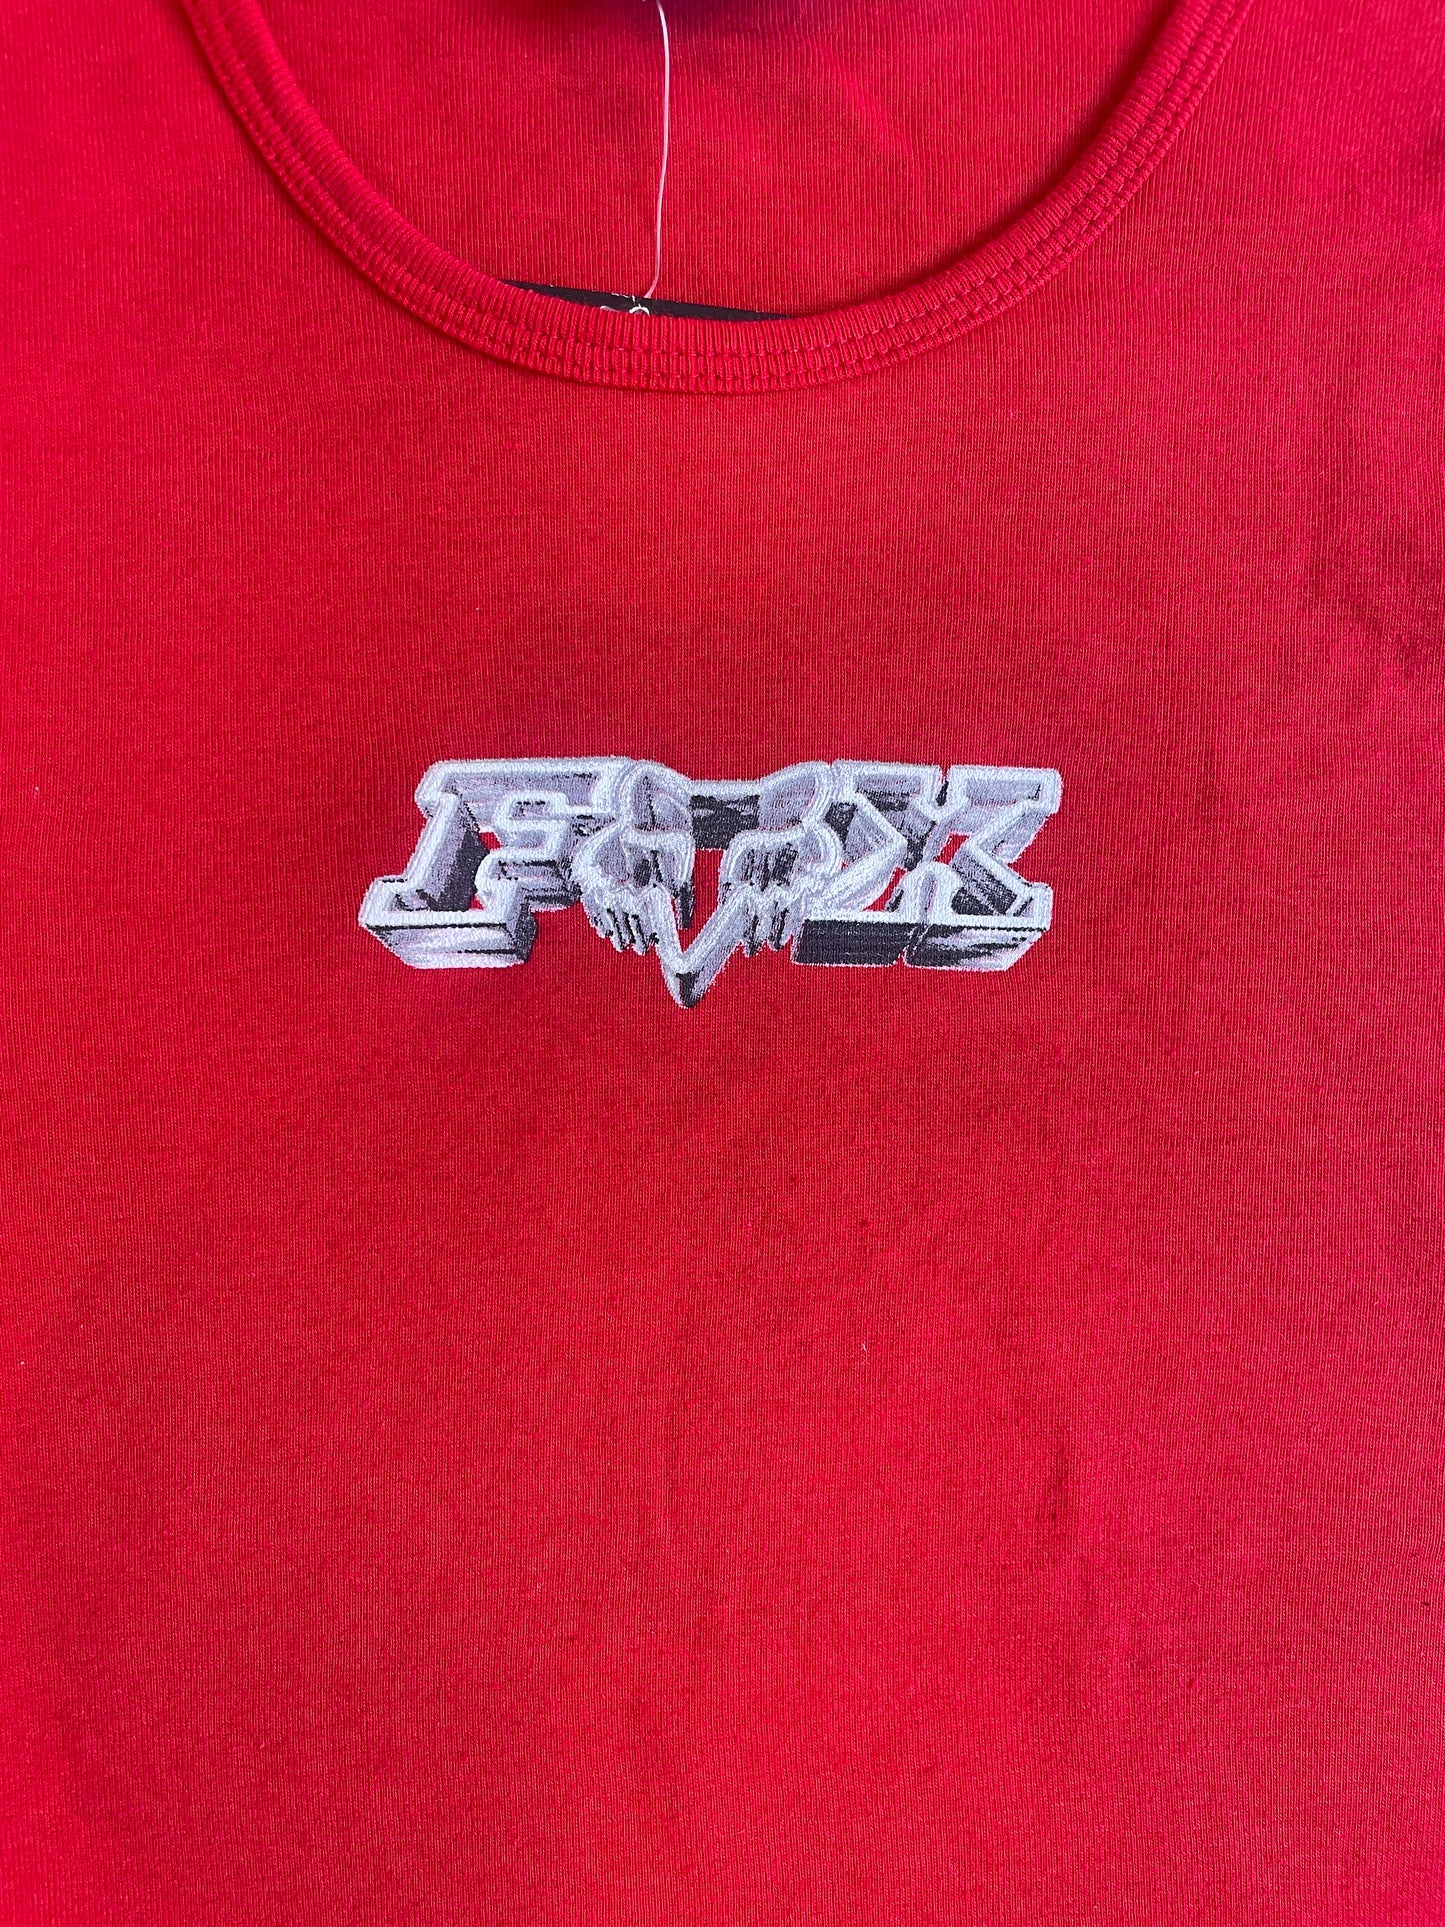 Fox Racing T-Shirt Red 3D Logo